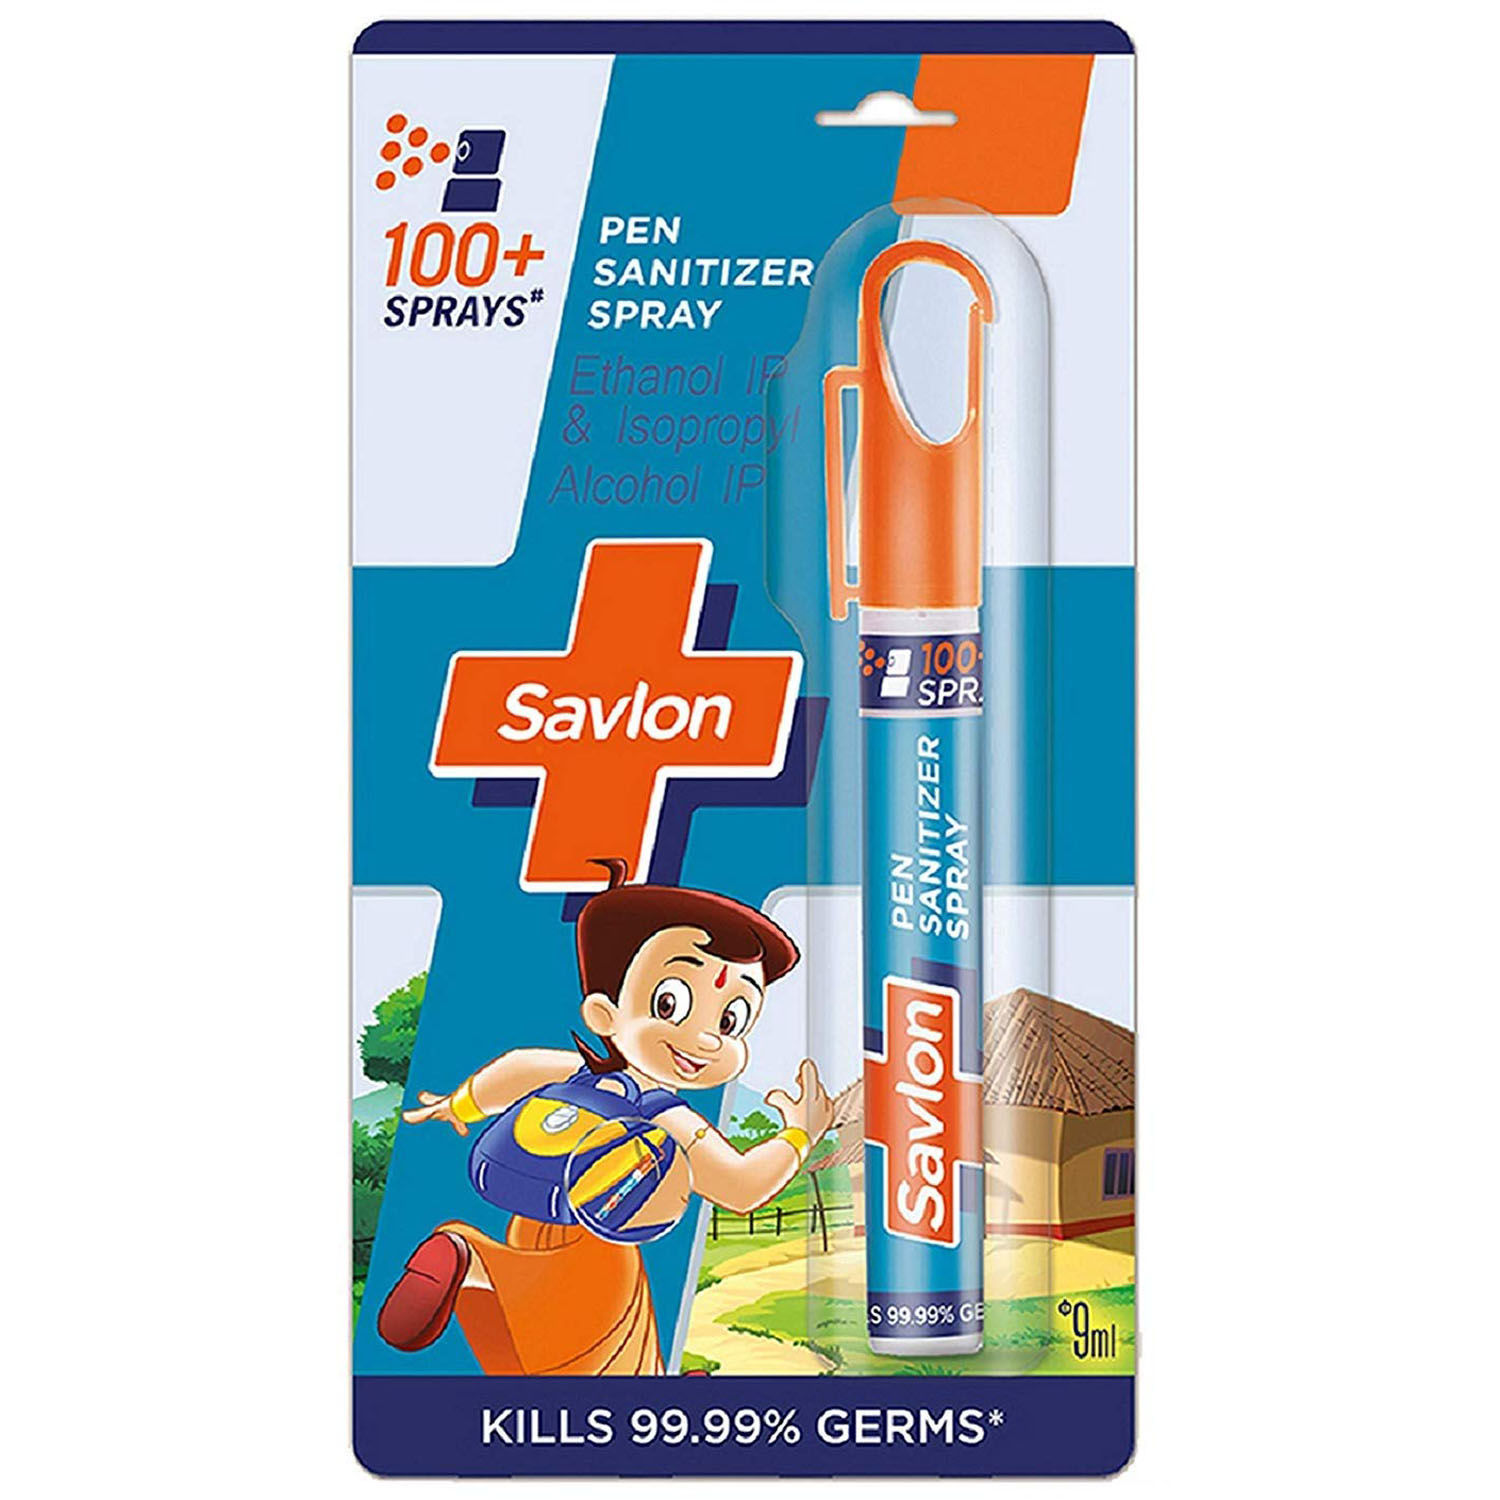 Buy Savlon Pen Sanitizer Spray 9ml Online